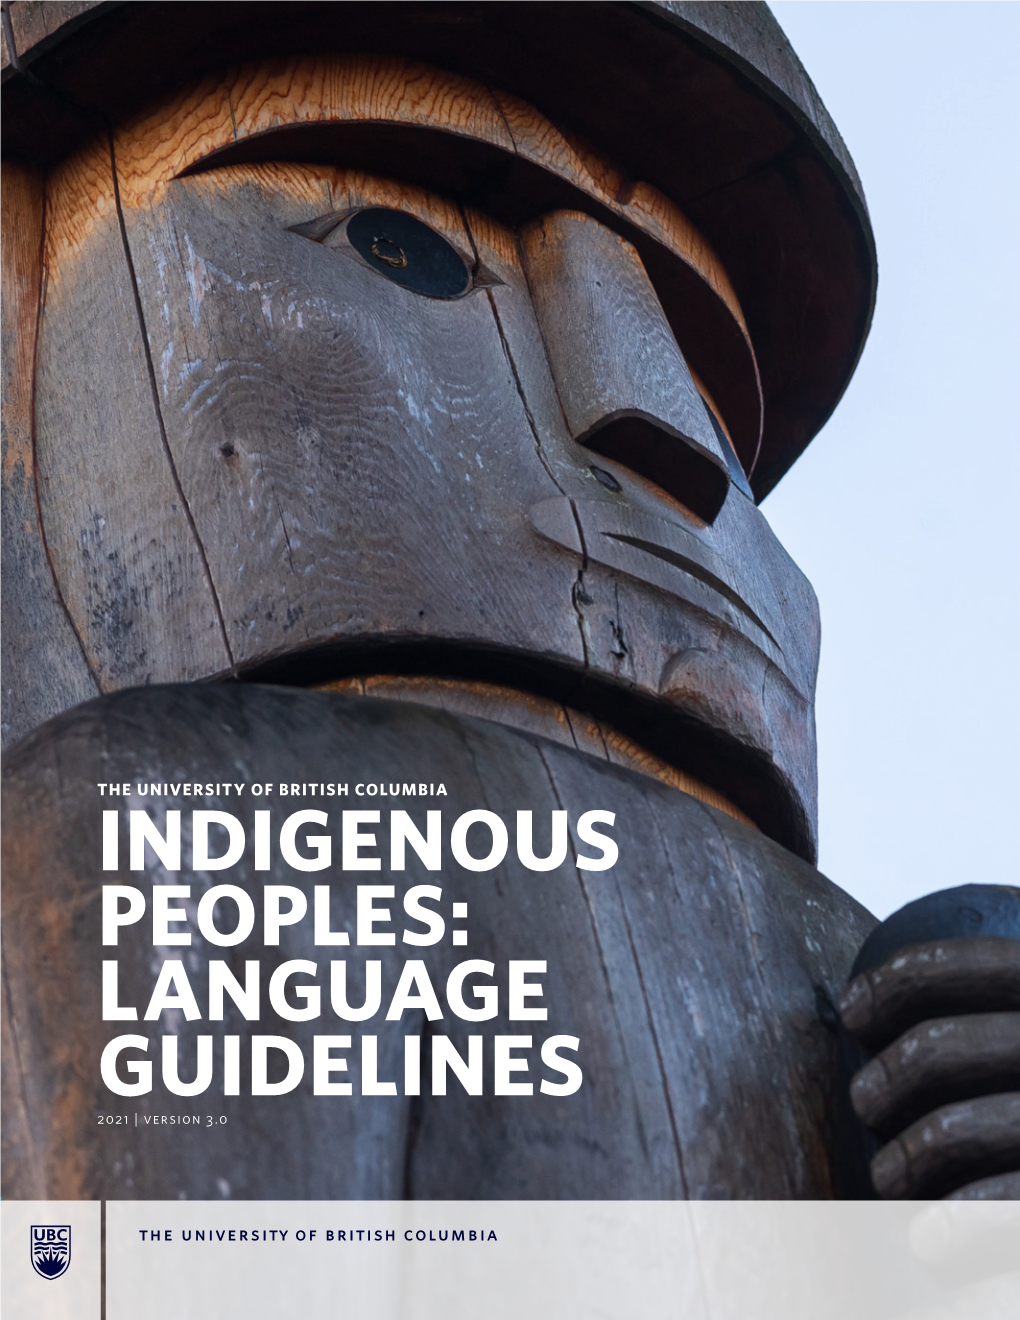 UBC – Indigenous Peoples: Language Guidelines